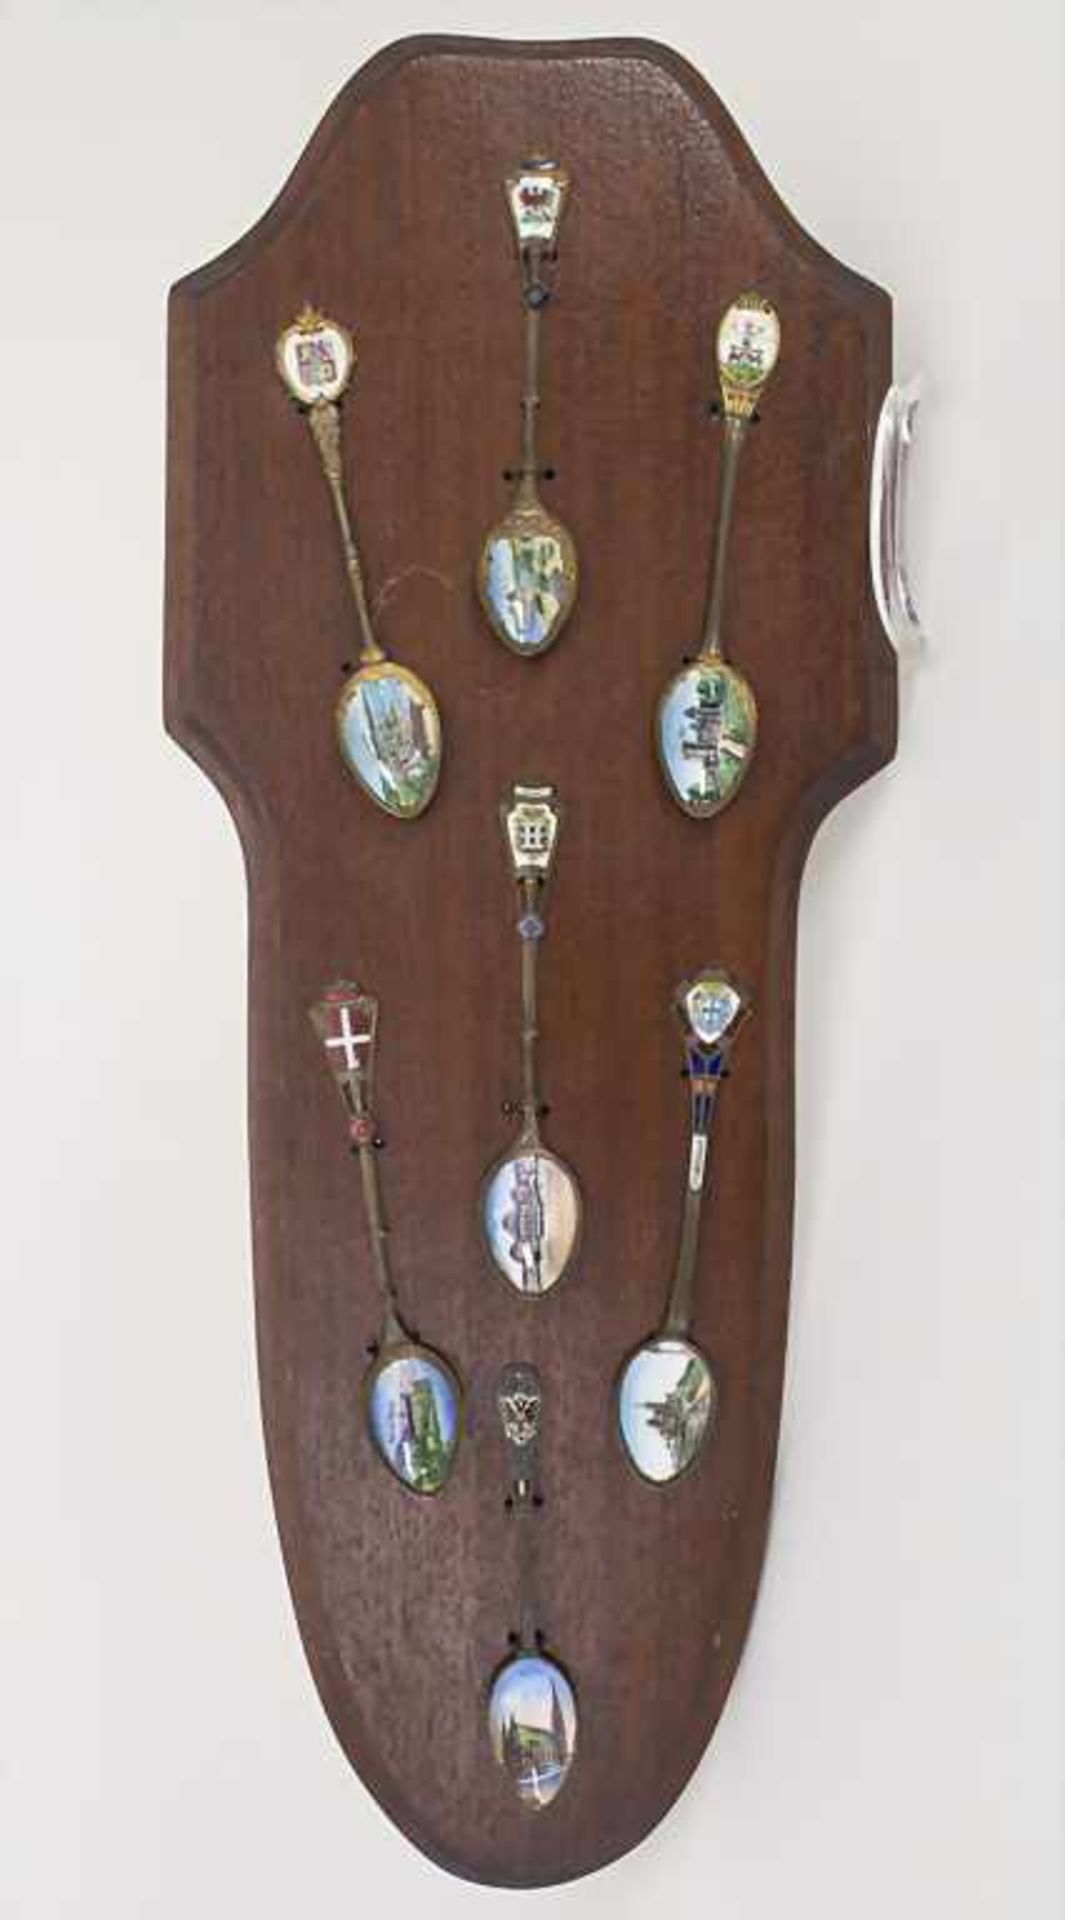 Brett mit 7 Jugendstil Andenkenlöffeln / A board with 7 Art Nouveau souvenir spoons, um